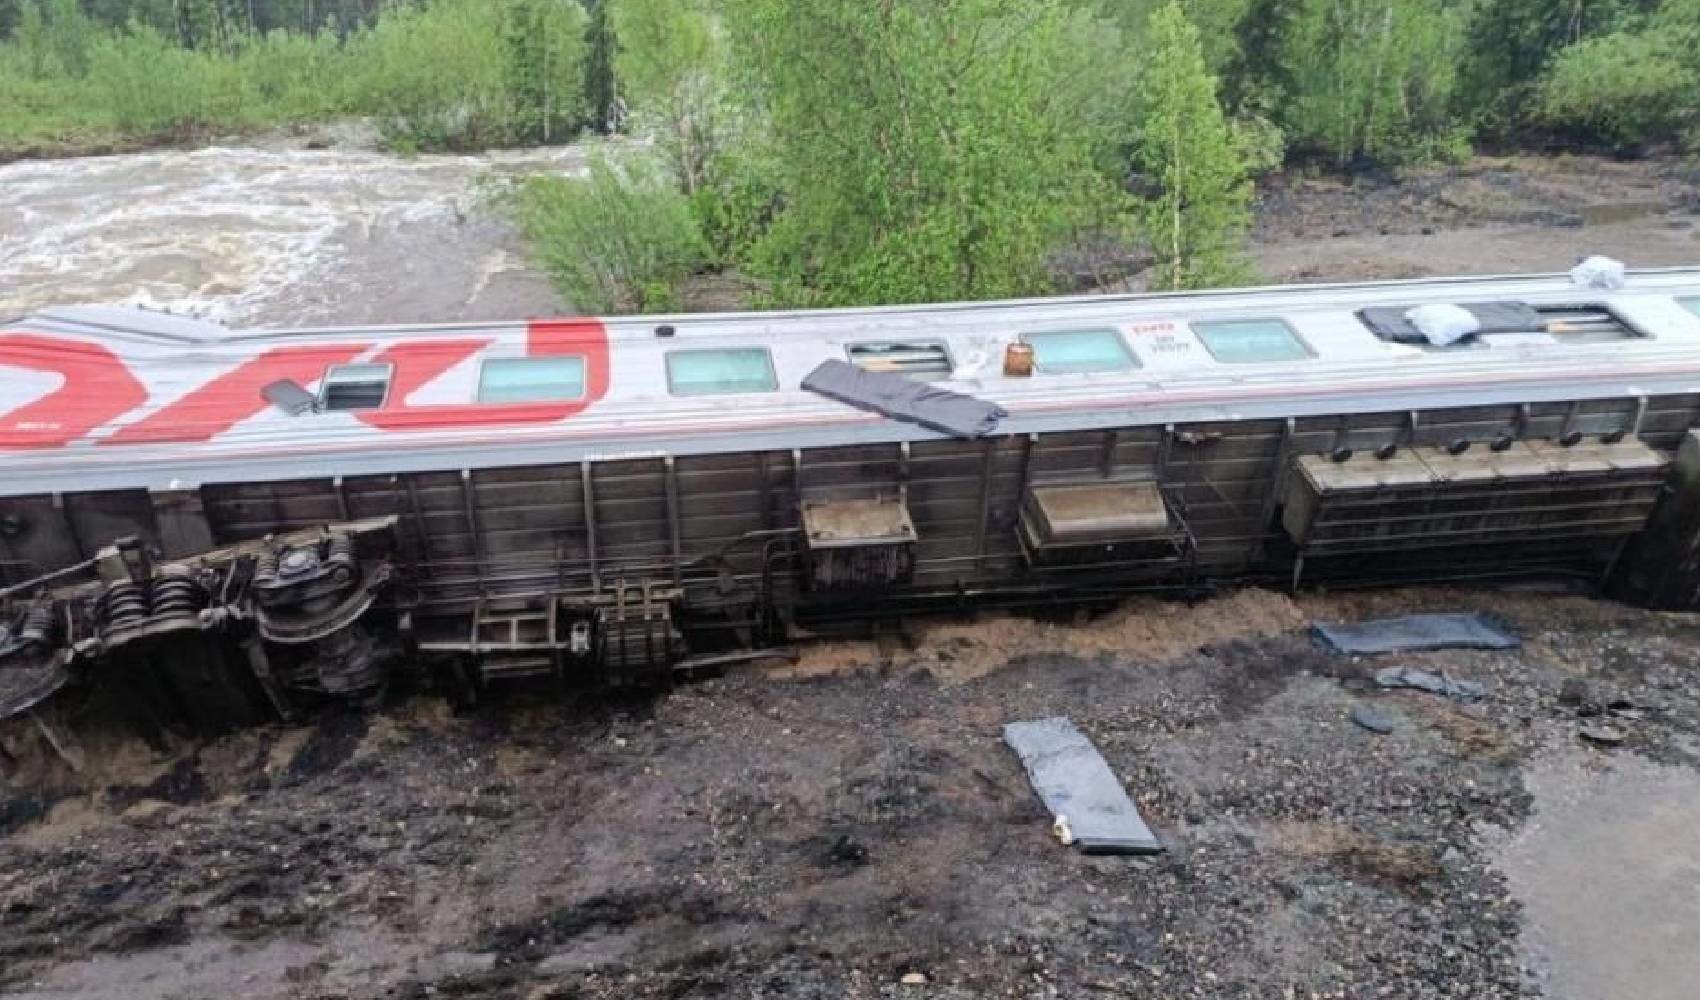 Rusya’da yolcu treni raydan çıktı: 50 yaralı